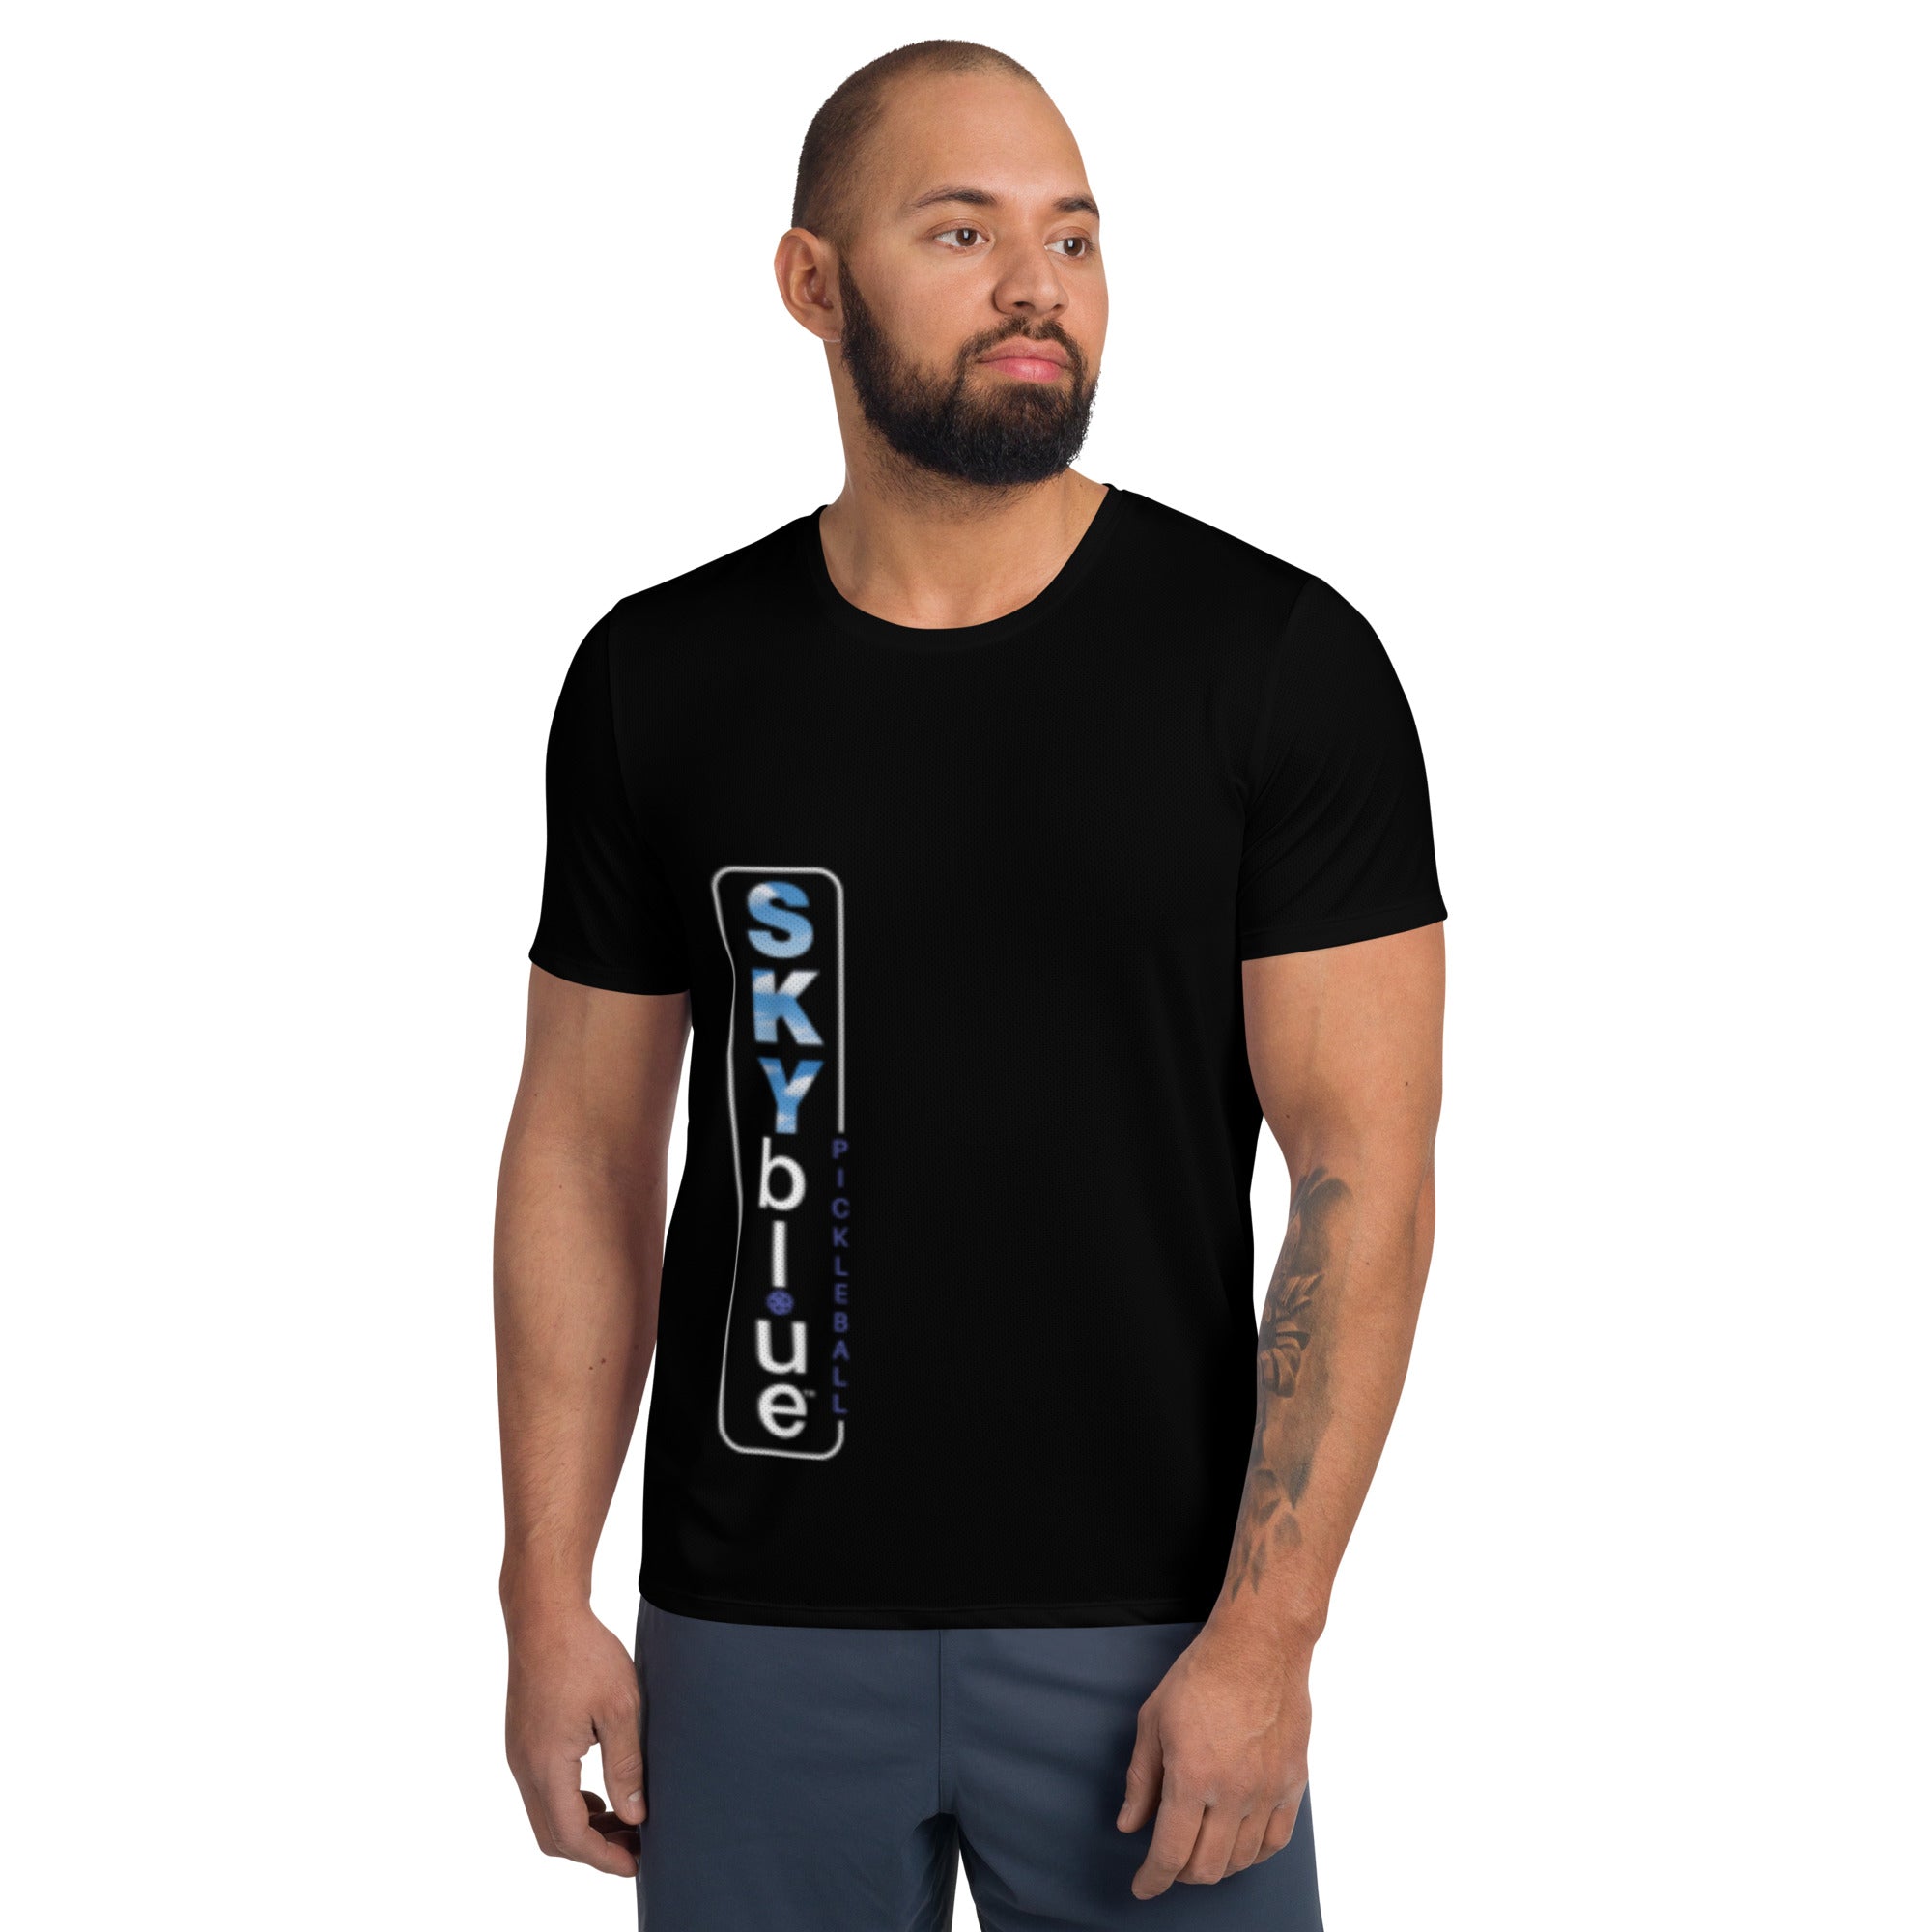 Black - Play Pickleball in Style! SKYblue™ for Got Pla(yed)id© Black, White, Blue & Pink Men's Performance Athletic Short Sleeve Shirt w/MaxDri & MicroBlok